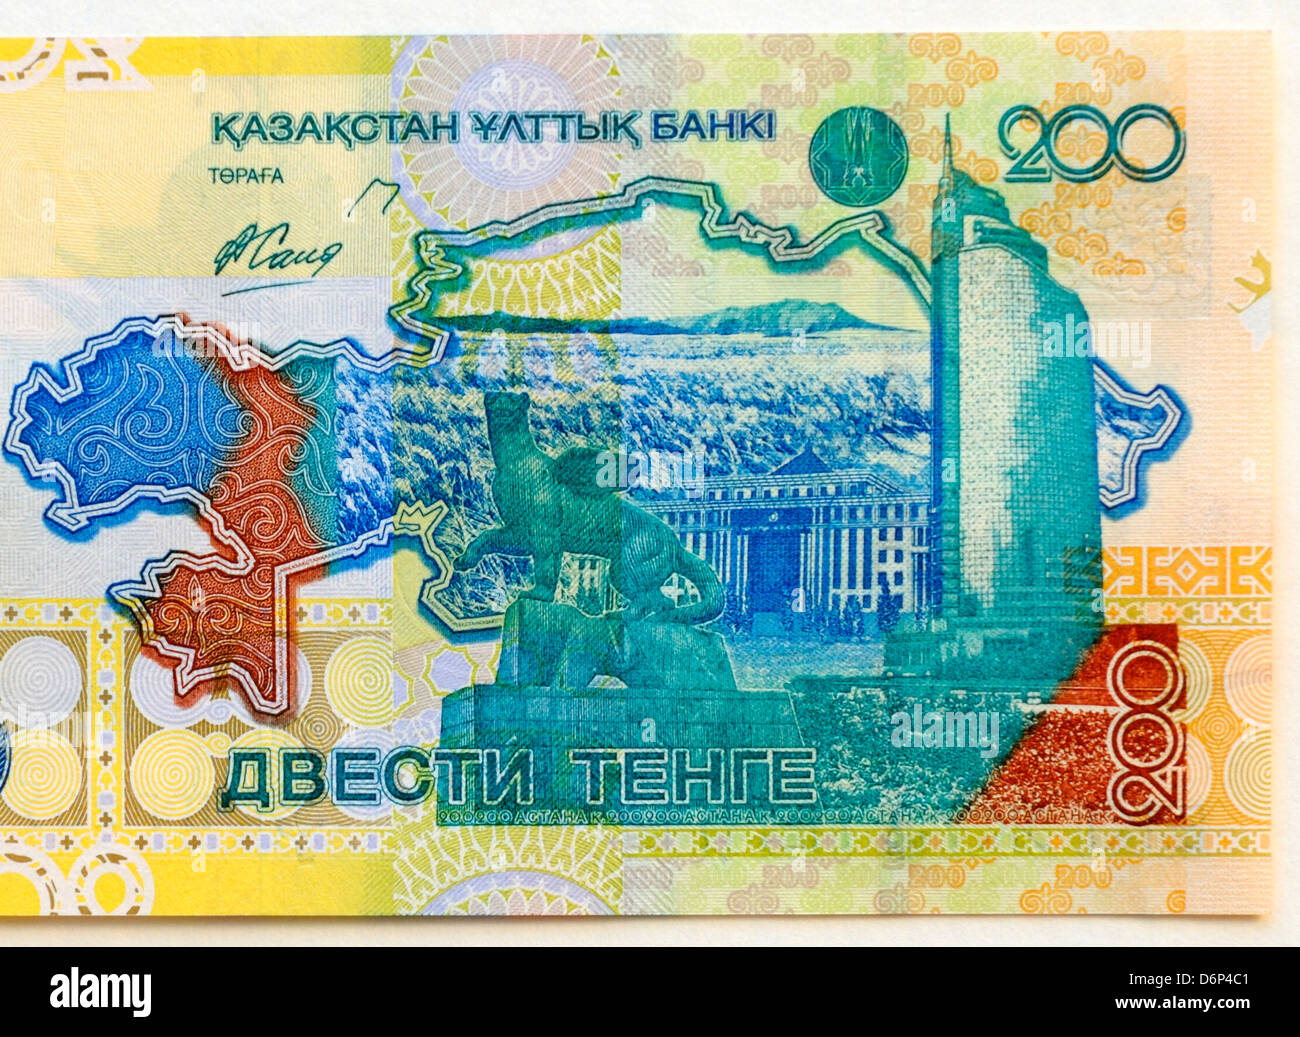 Kazakhstan Two Hundred 200 Tenge Bank Note Stock Photo